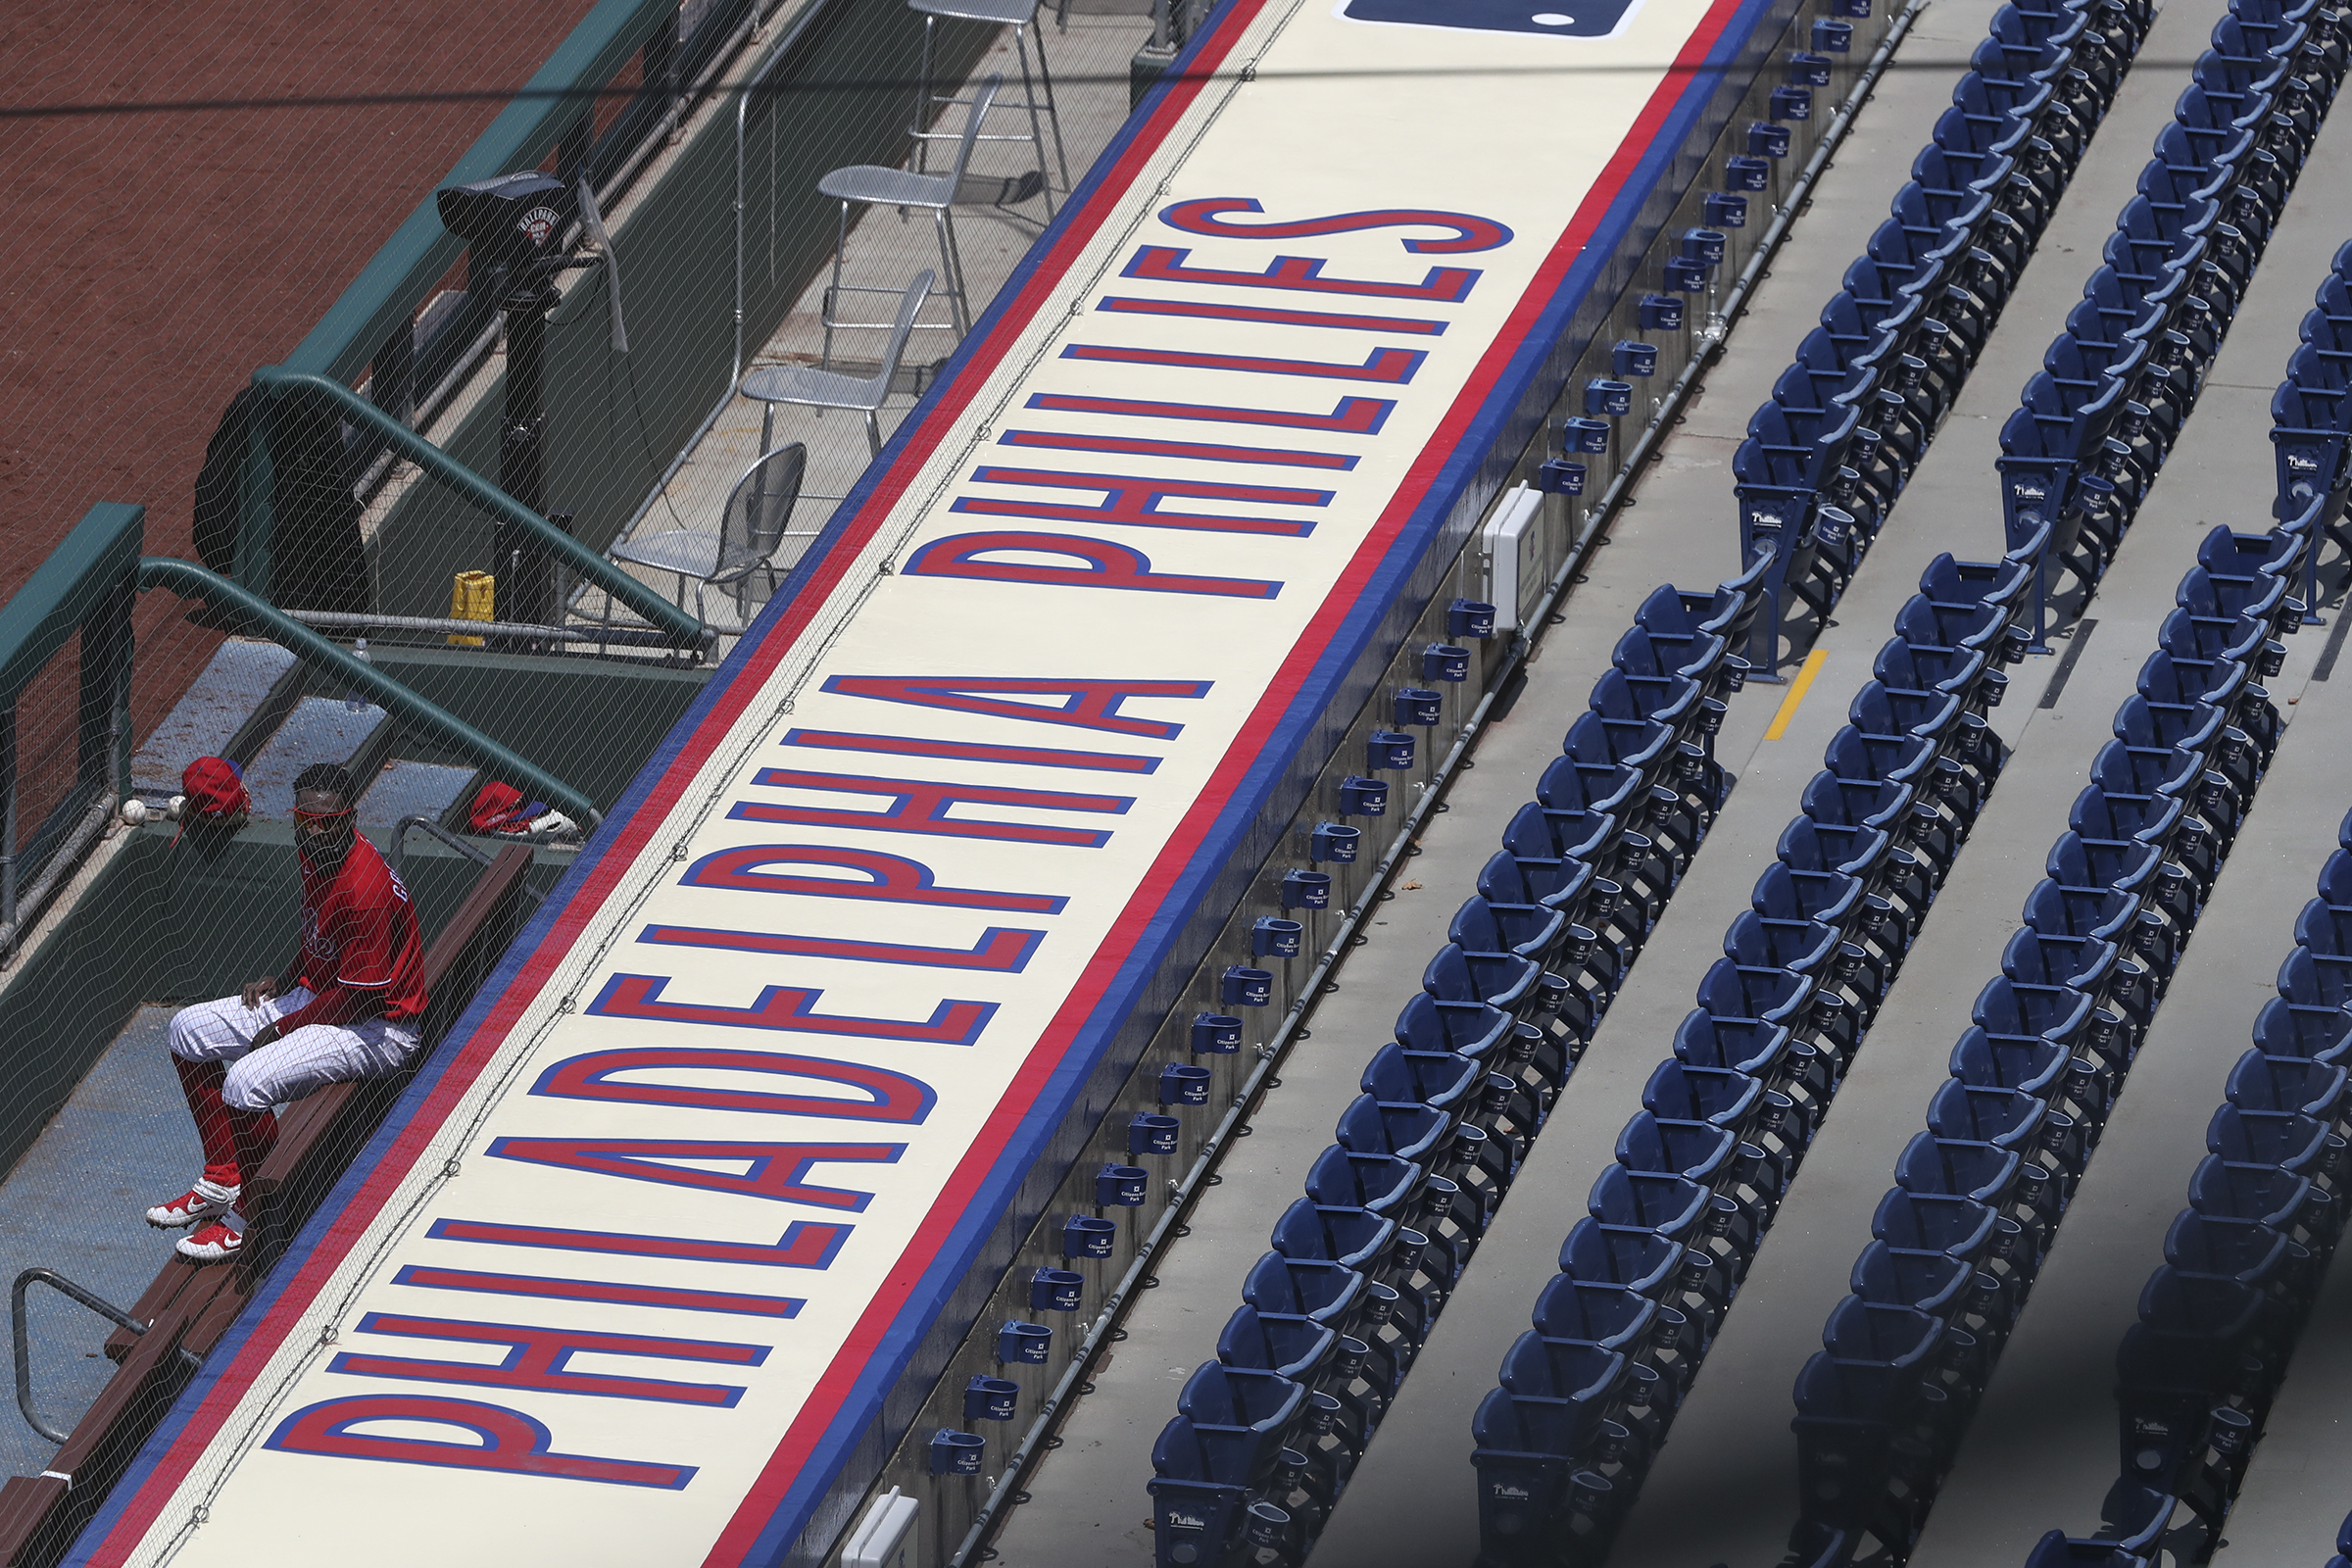 Didi Gregorius Philadelphia Phillies bobblehead features shortstop